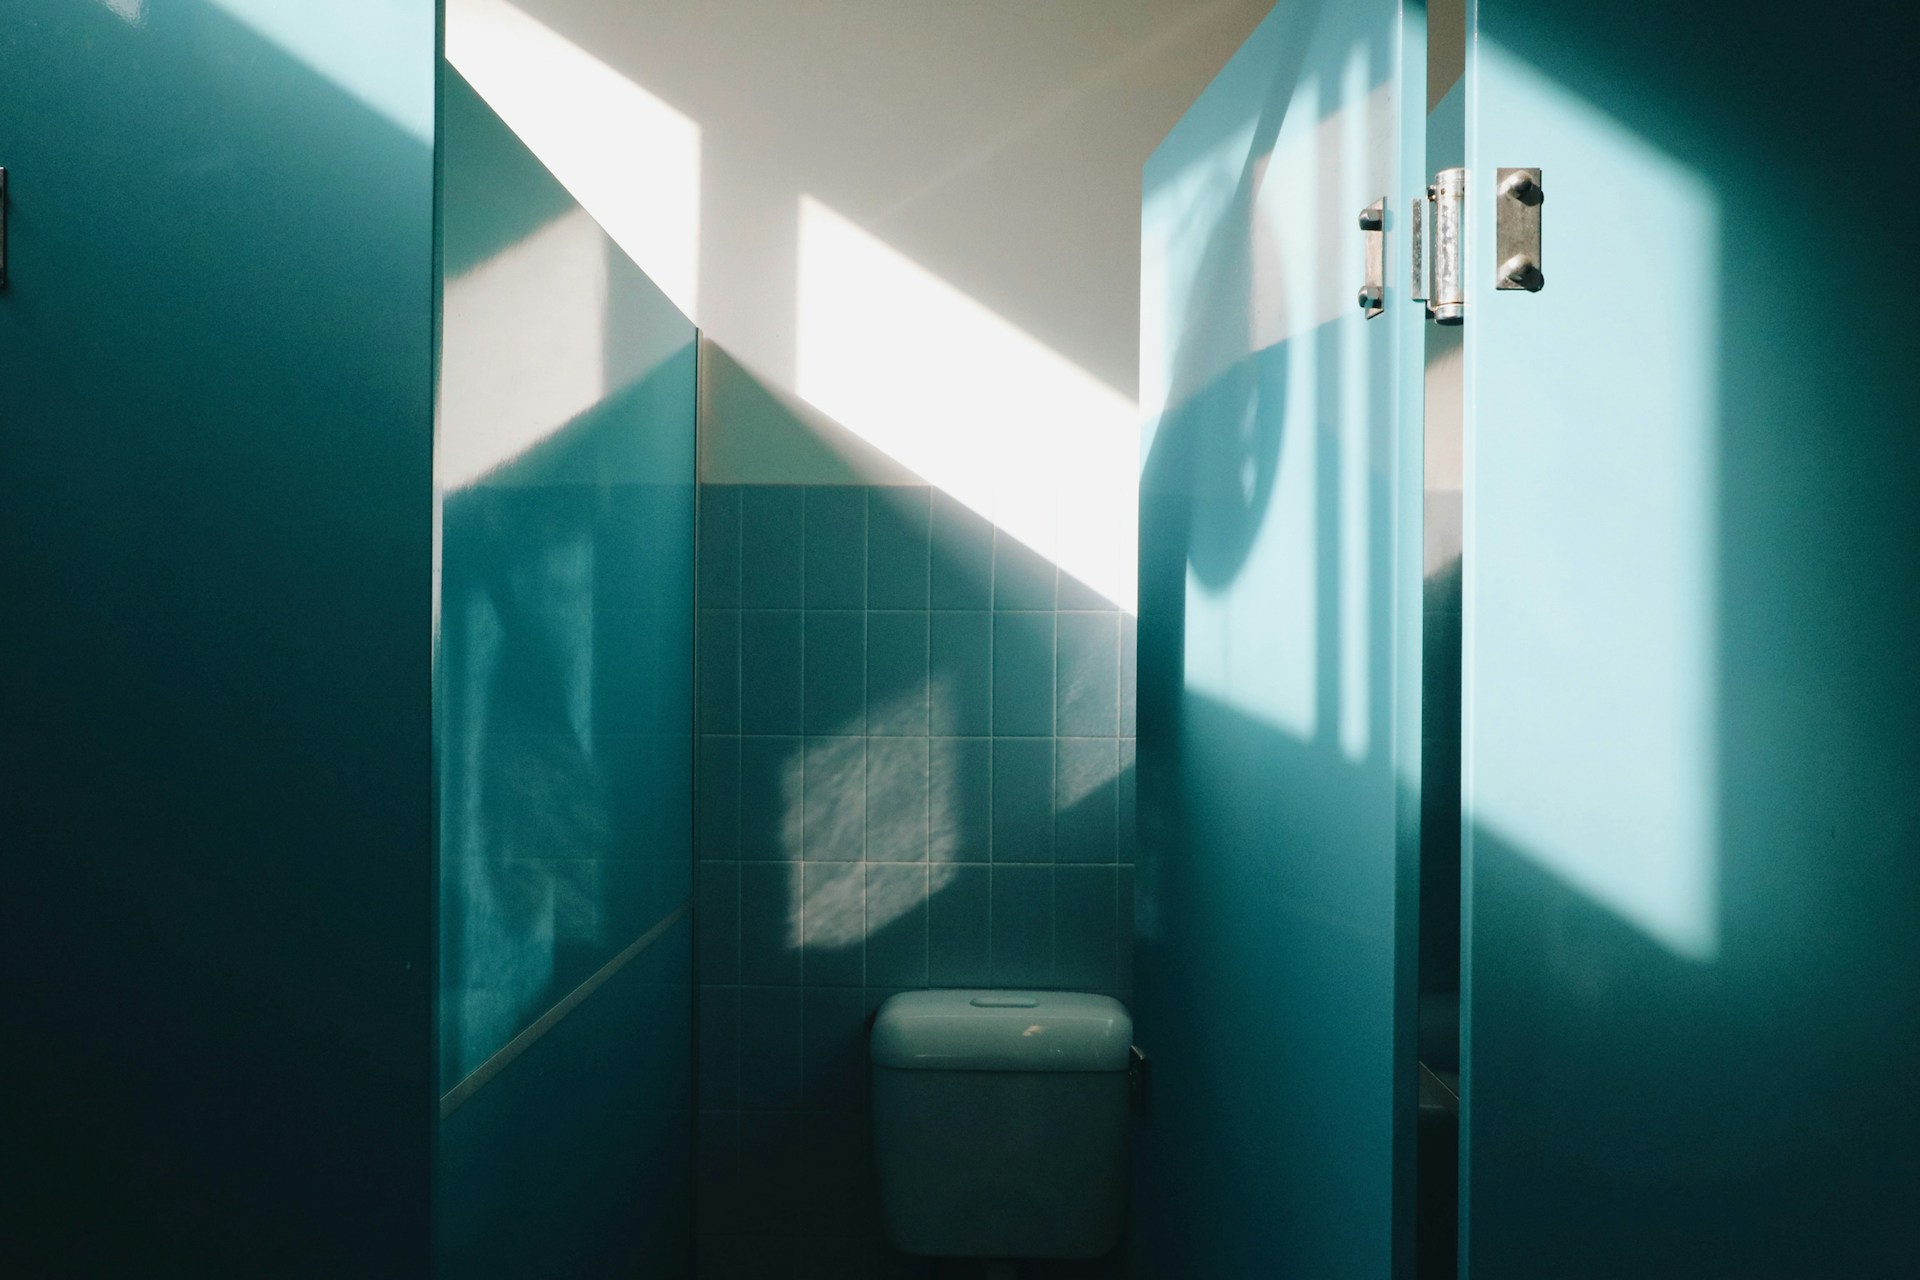 A bathroom stall | Source: Unsplash